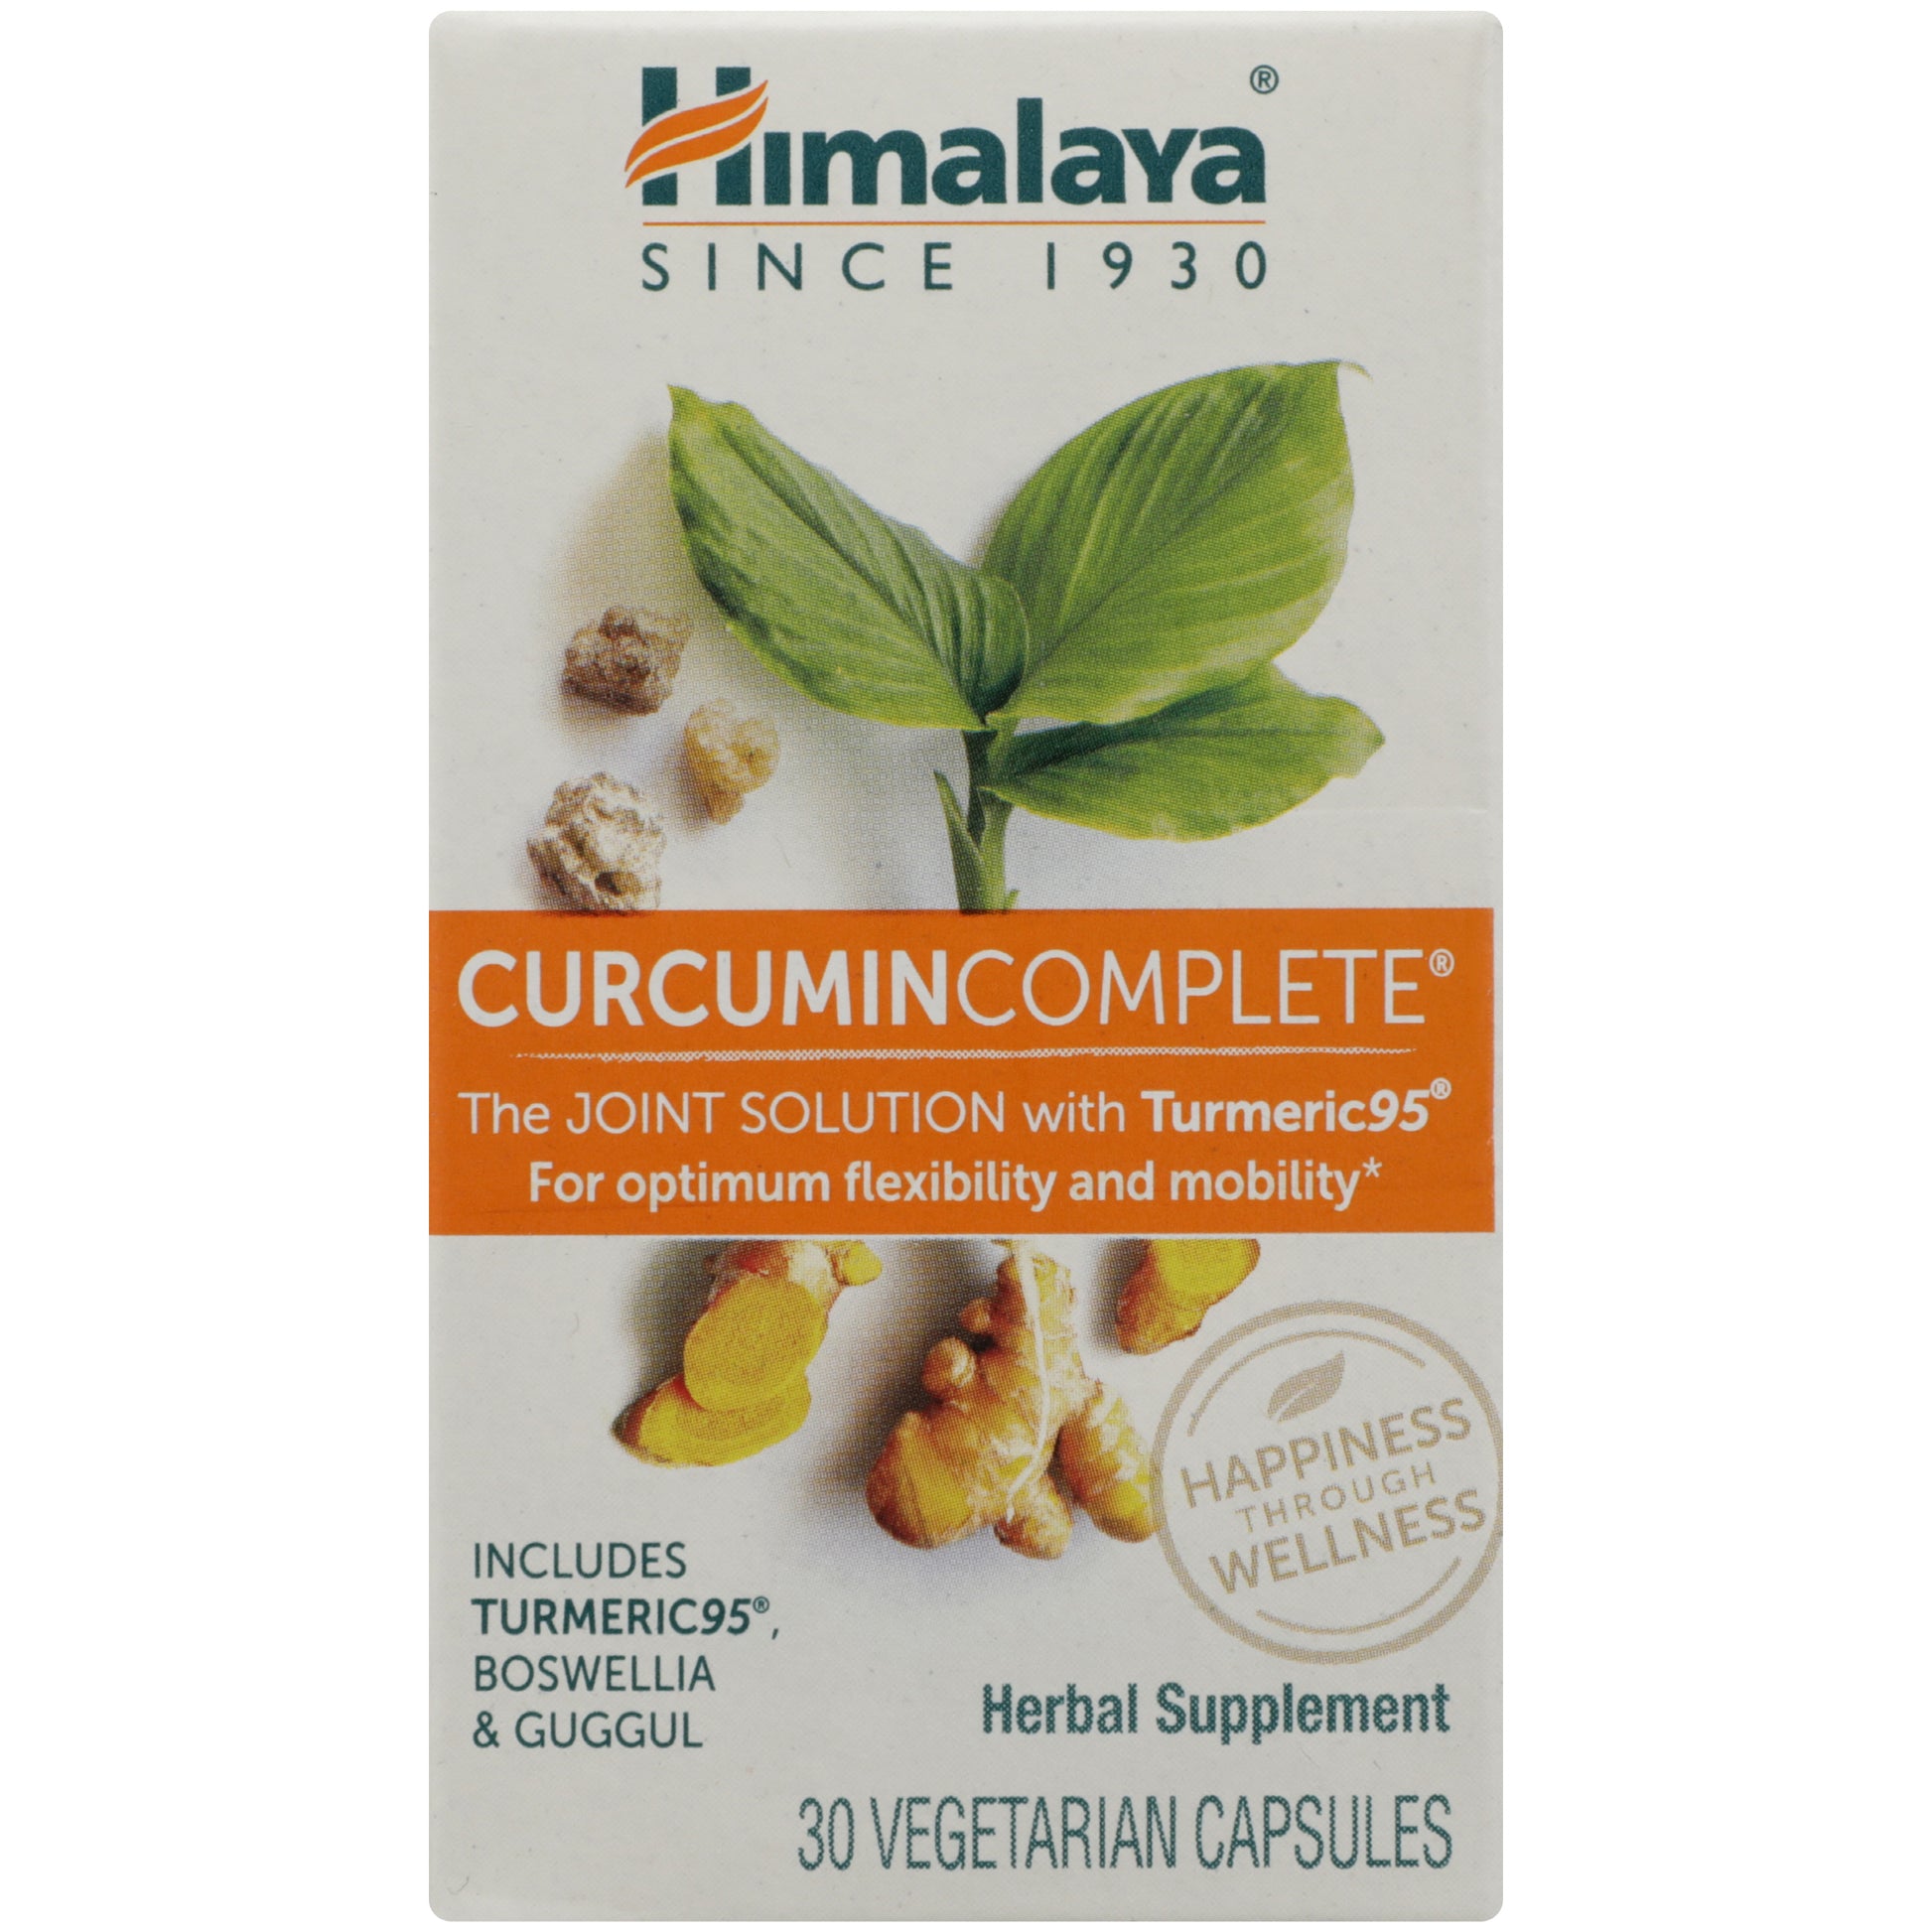 Himalaya Curcumin Complete 30 Vegetarian Capsules Front of Box